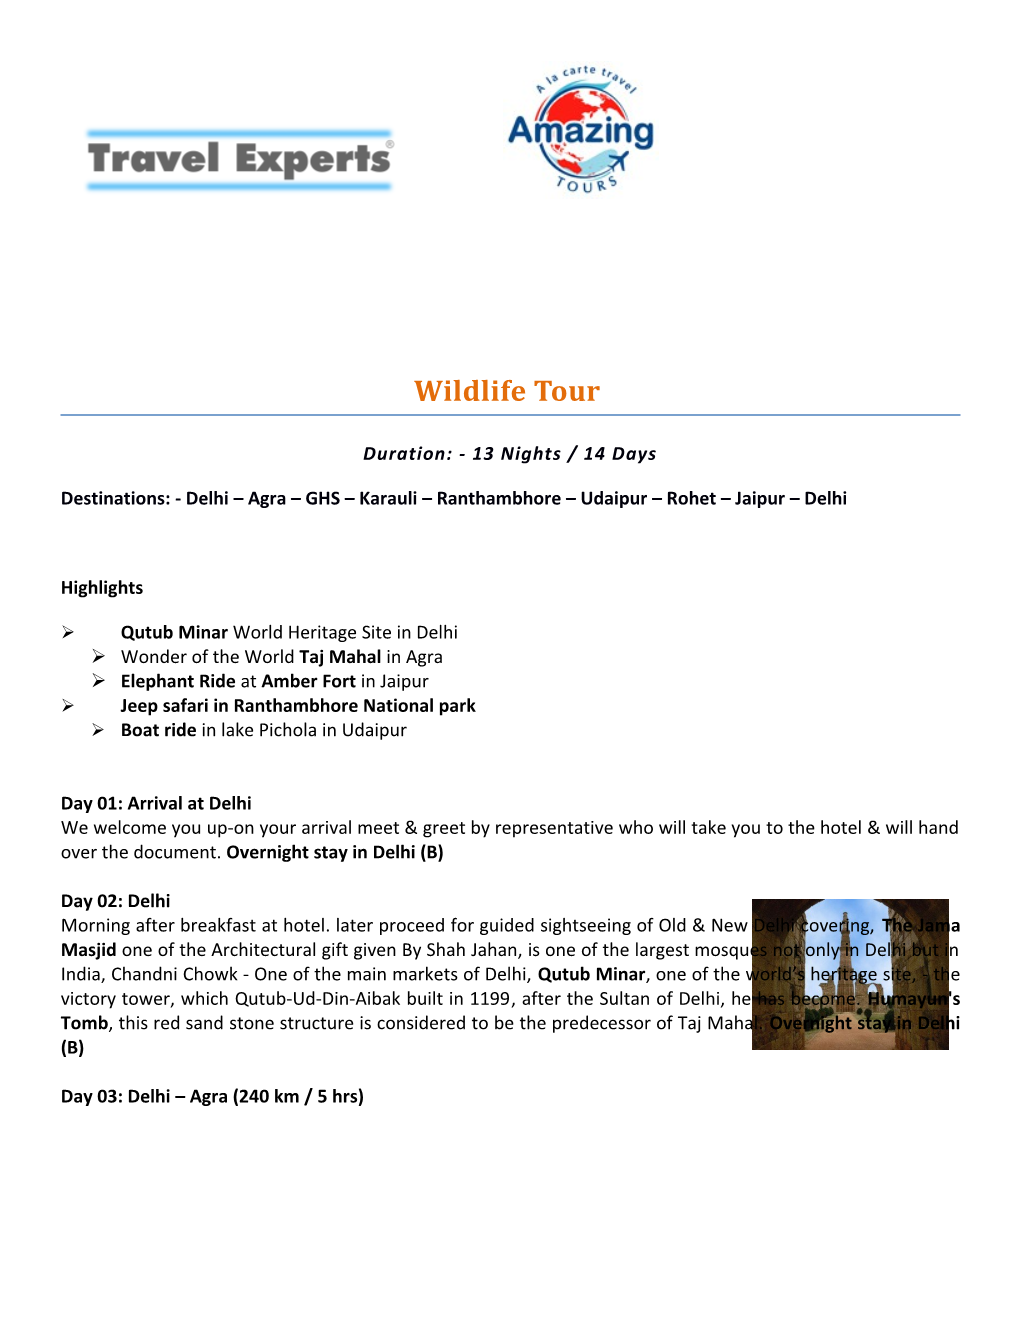 Destinations: -Delhi Agra GHS Karauli Ranthambhore Udaipur Rohet Jaipur Delhi